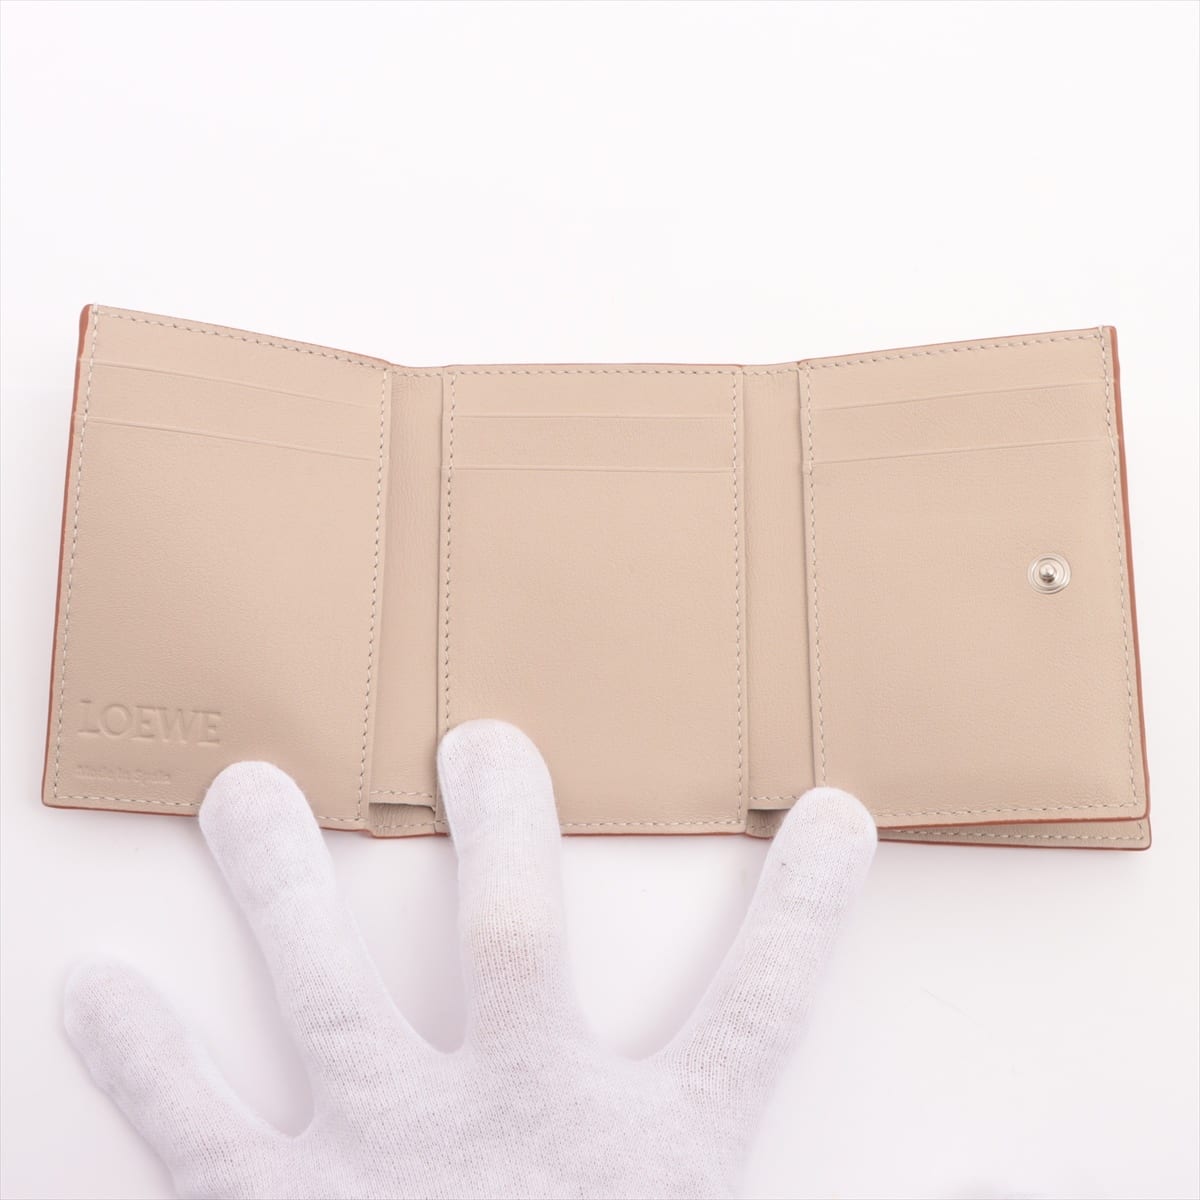 Loewe Anagram Tri Fold Leather Wallet Ivory